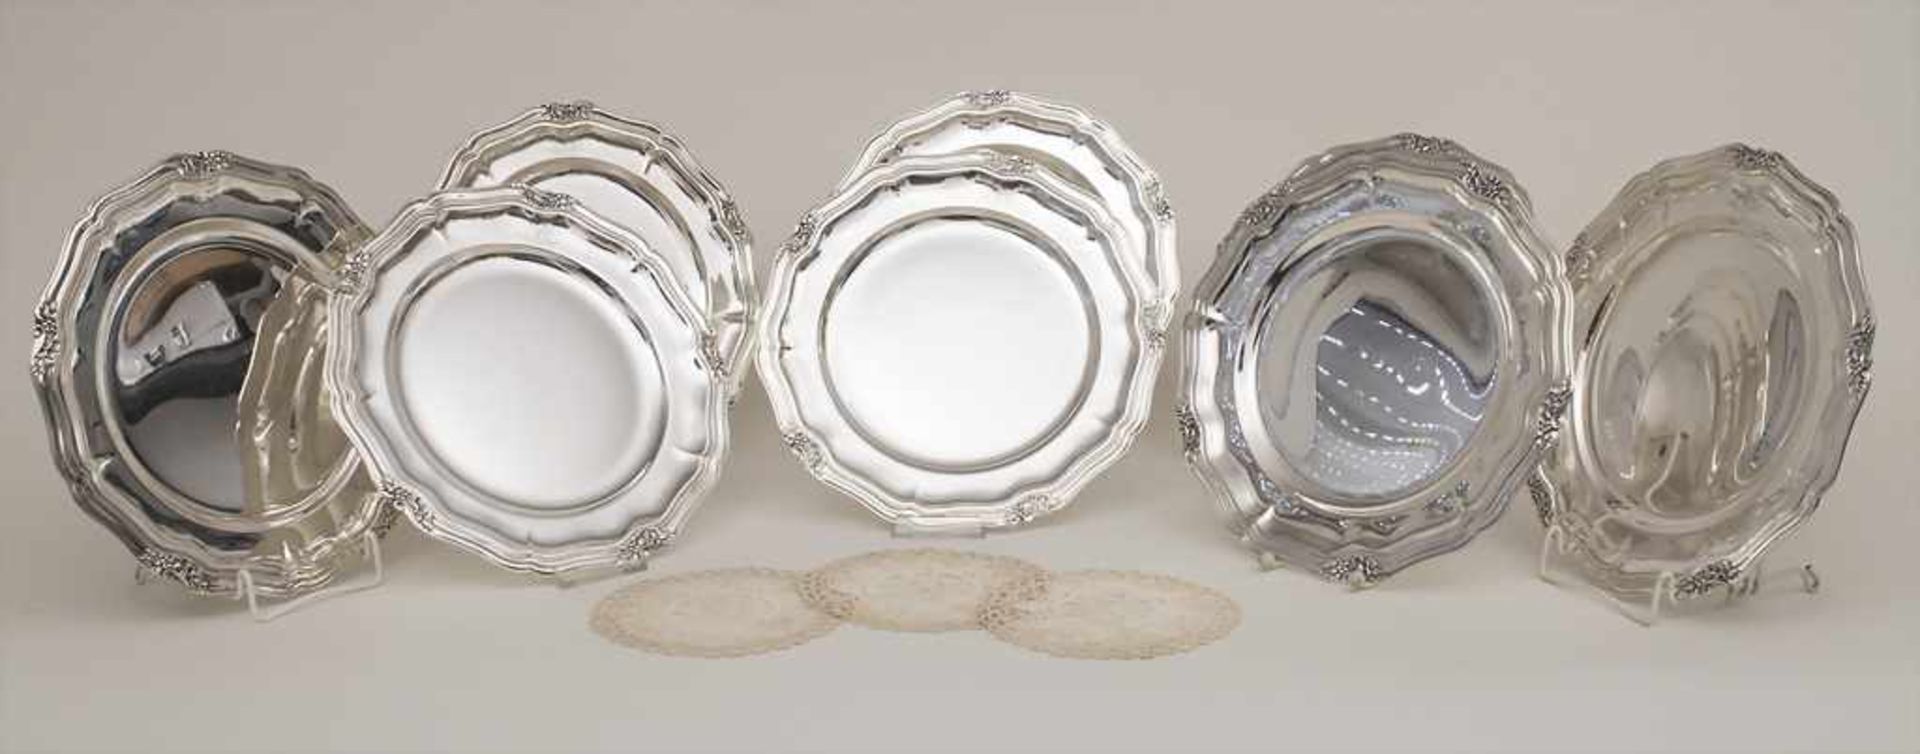 8 Platzteller / 8 silver underplates, Carl M. Cohr, Fredericia, Dänemark / Denmark, 1936Material: